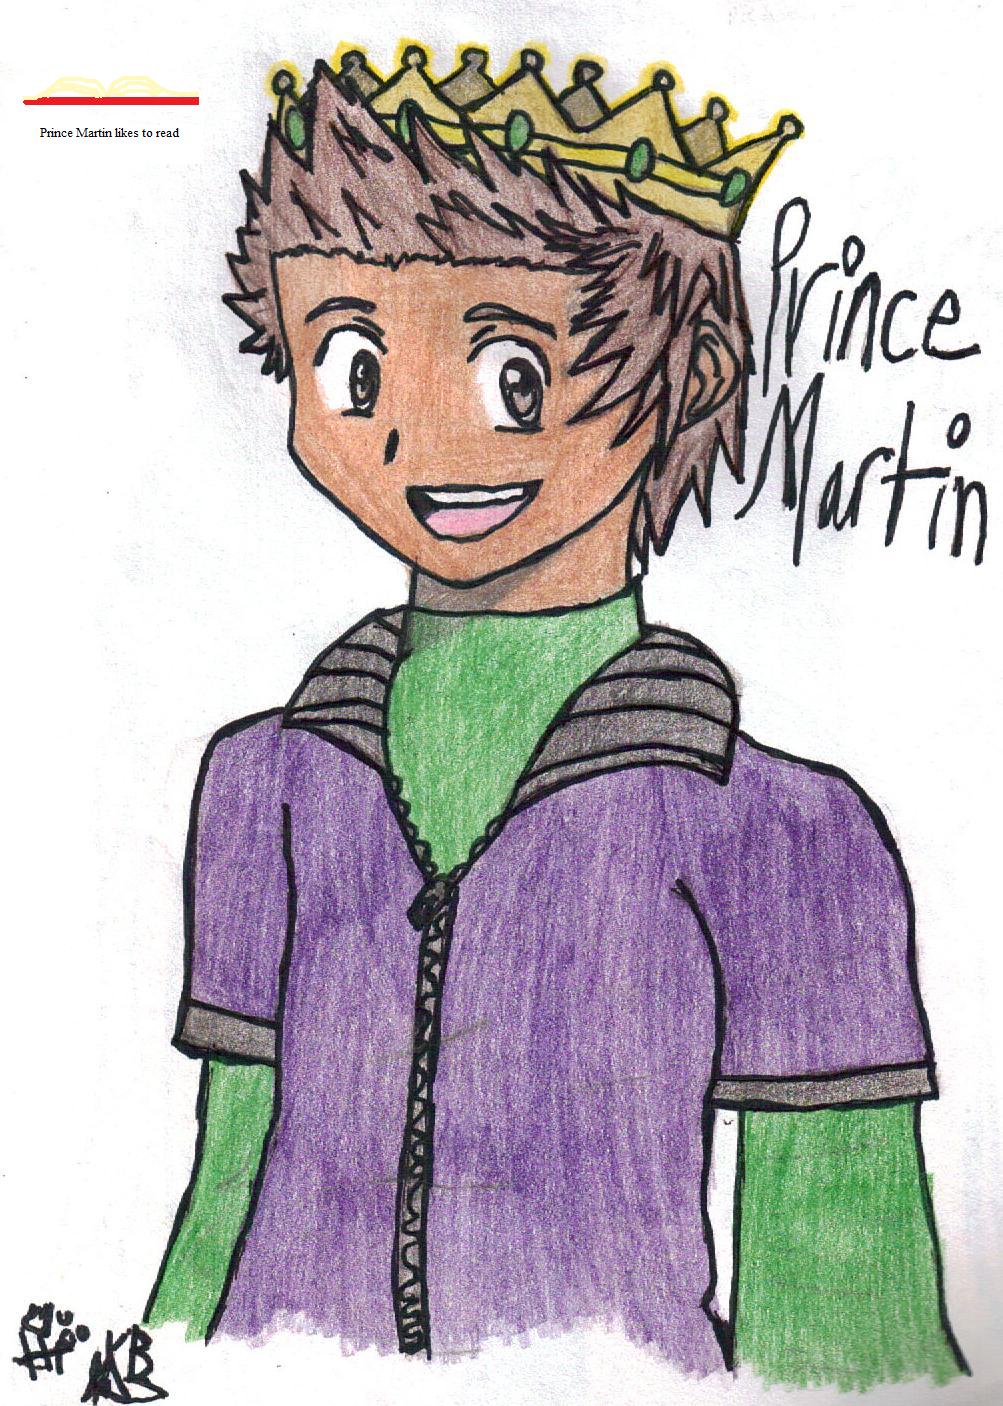 Prince Martin art trade by Kelalailea